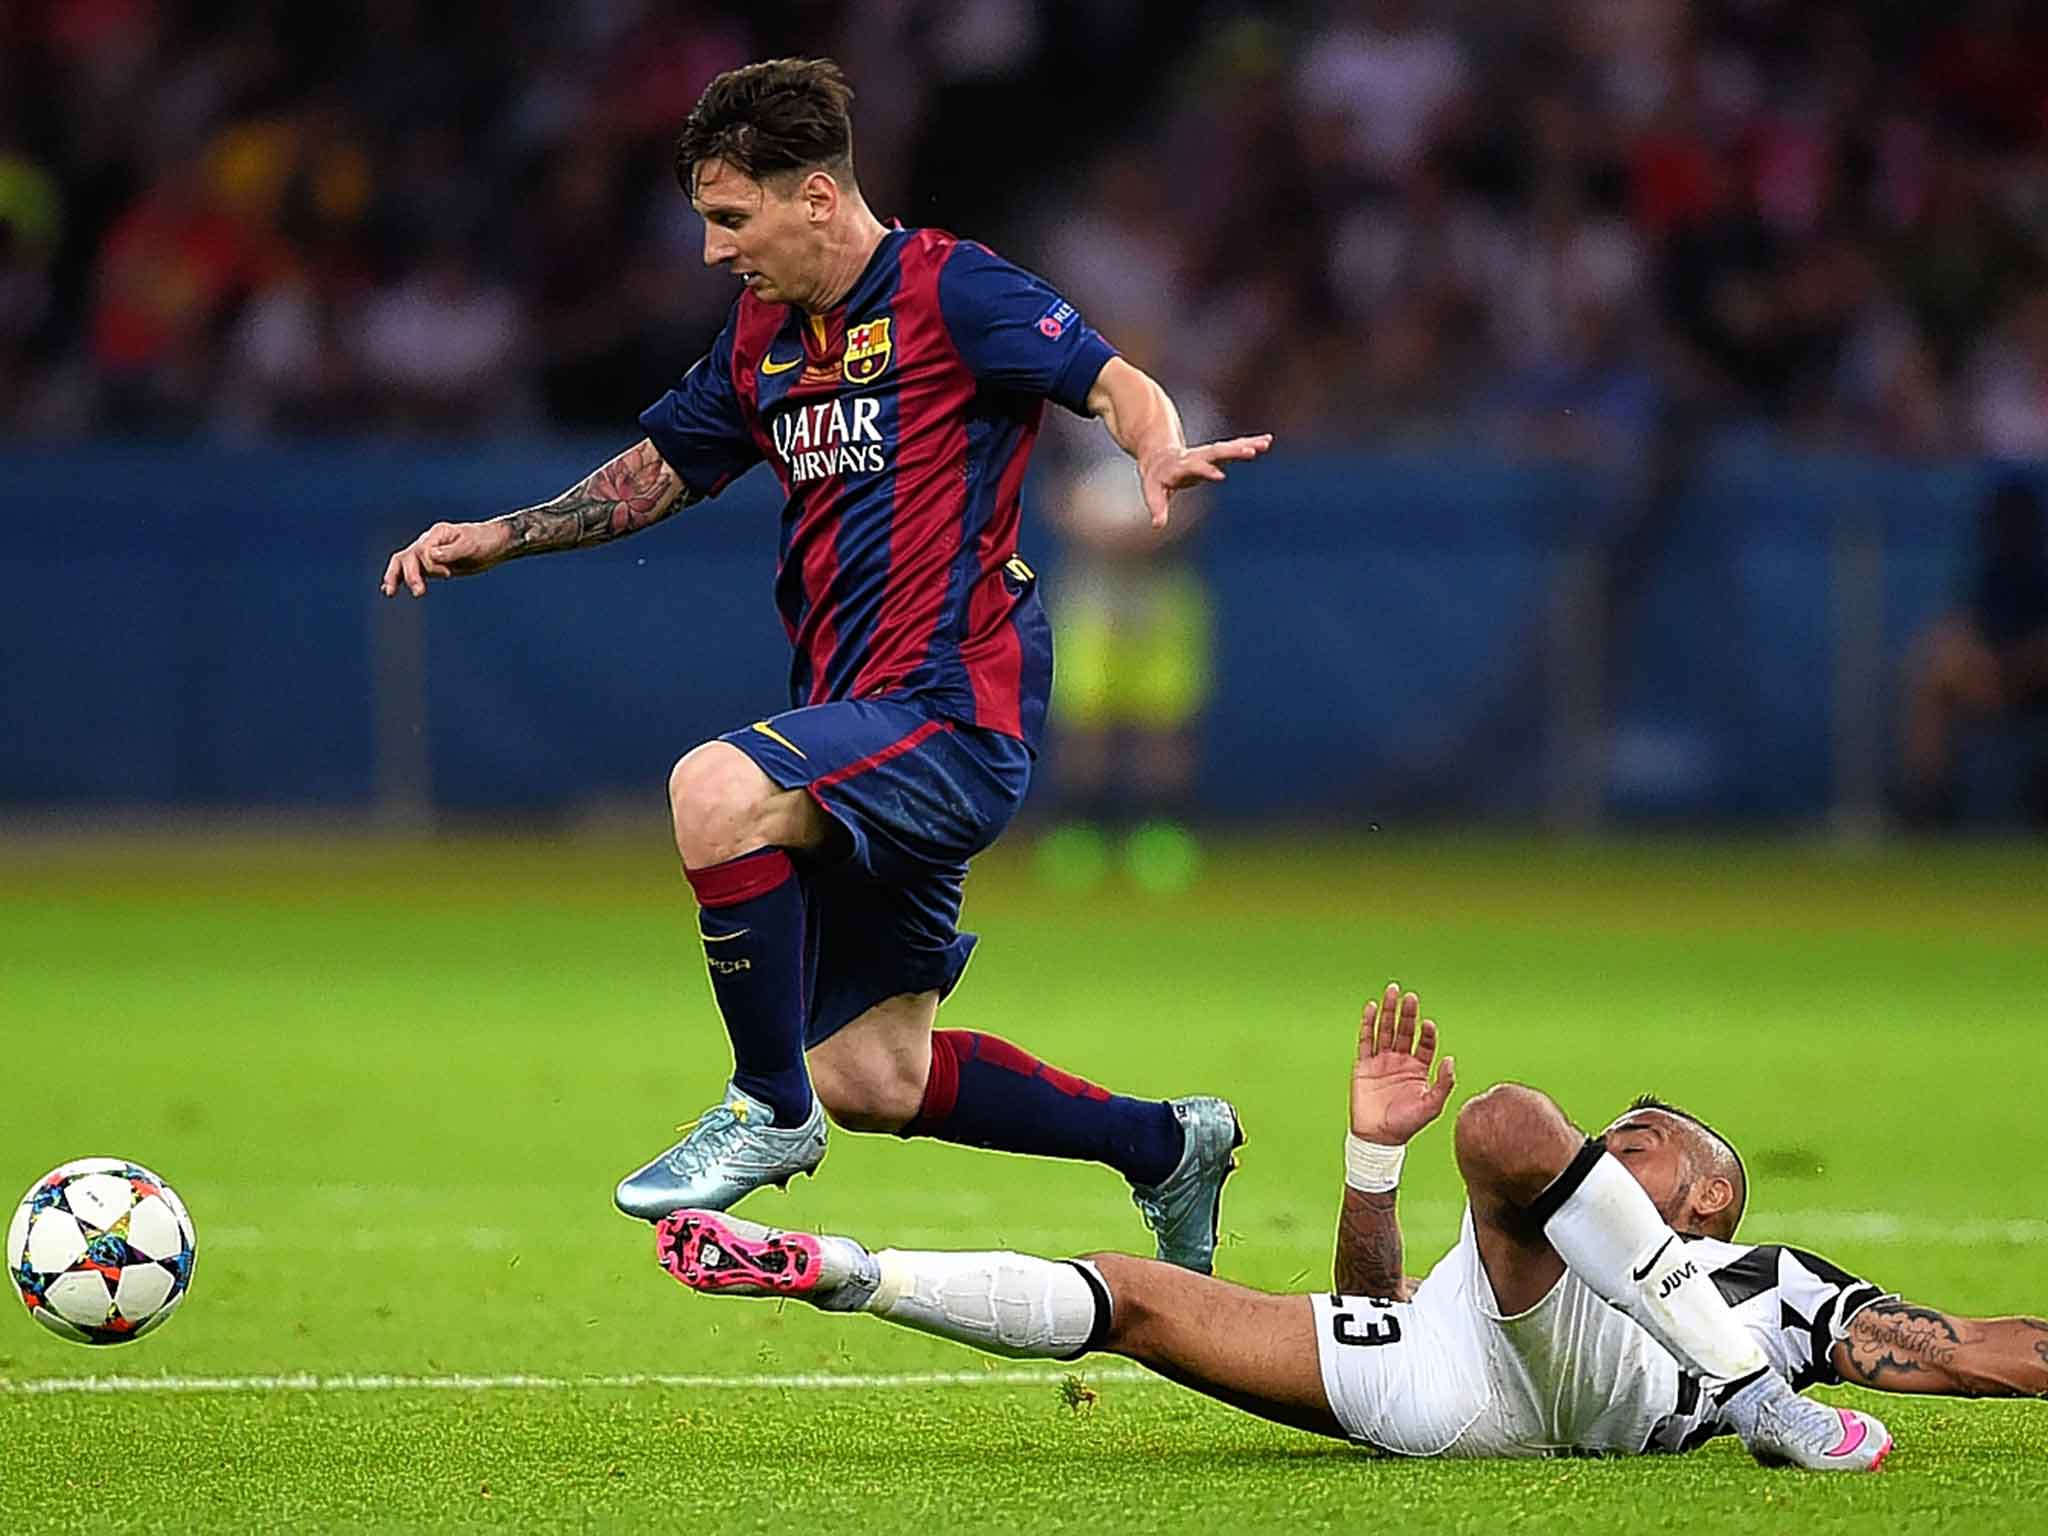 Lionel Messi skips over the challenge of Arturo Vidal